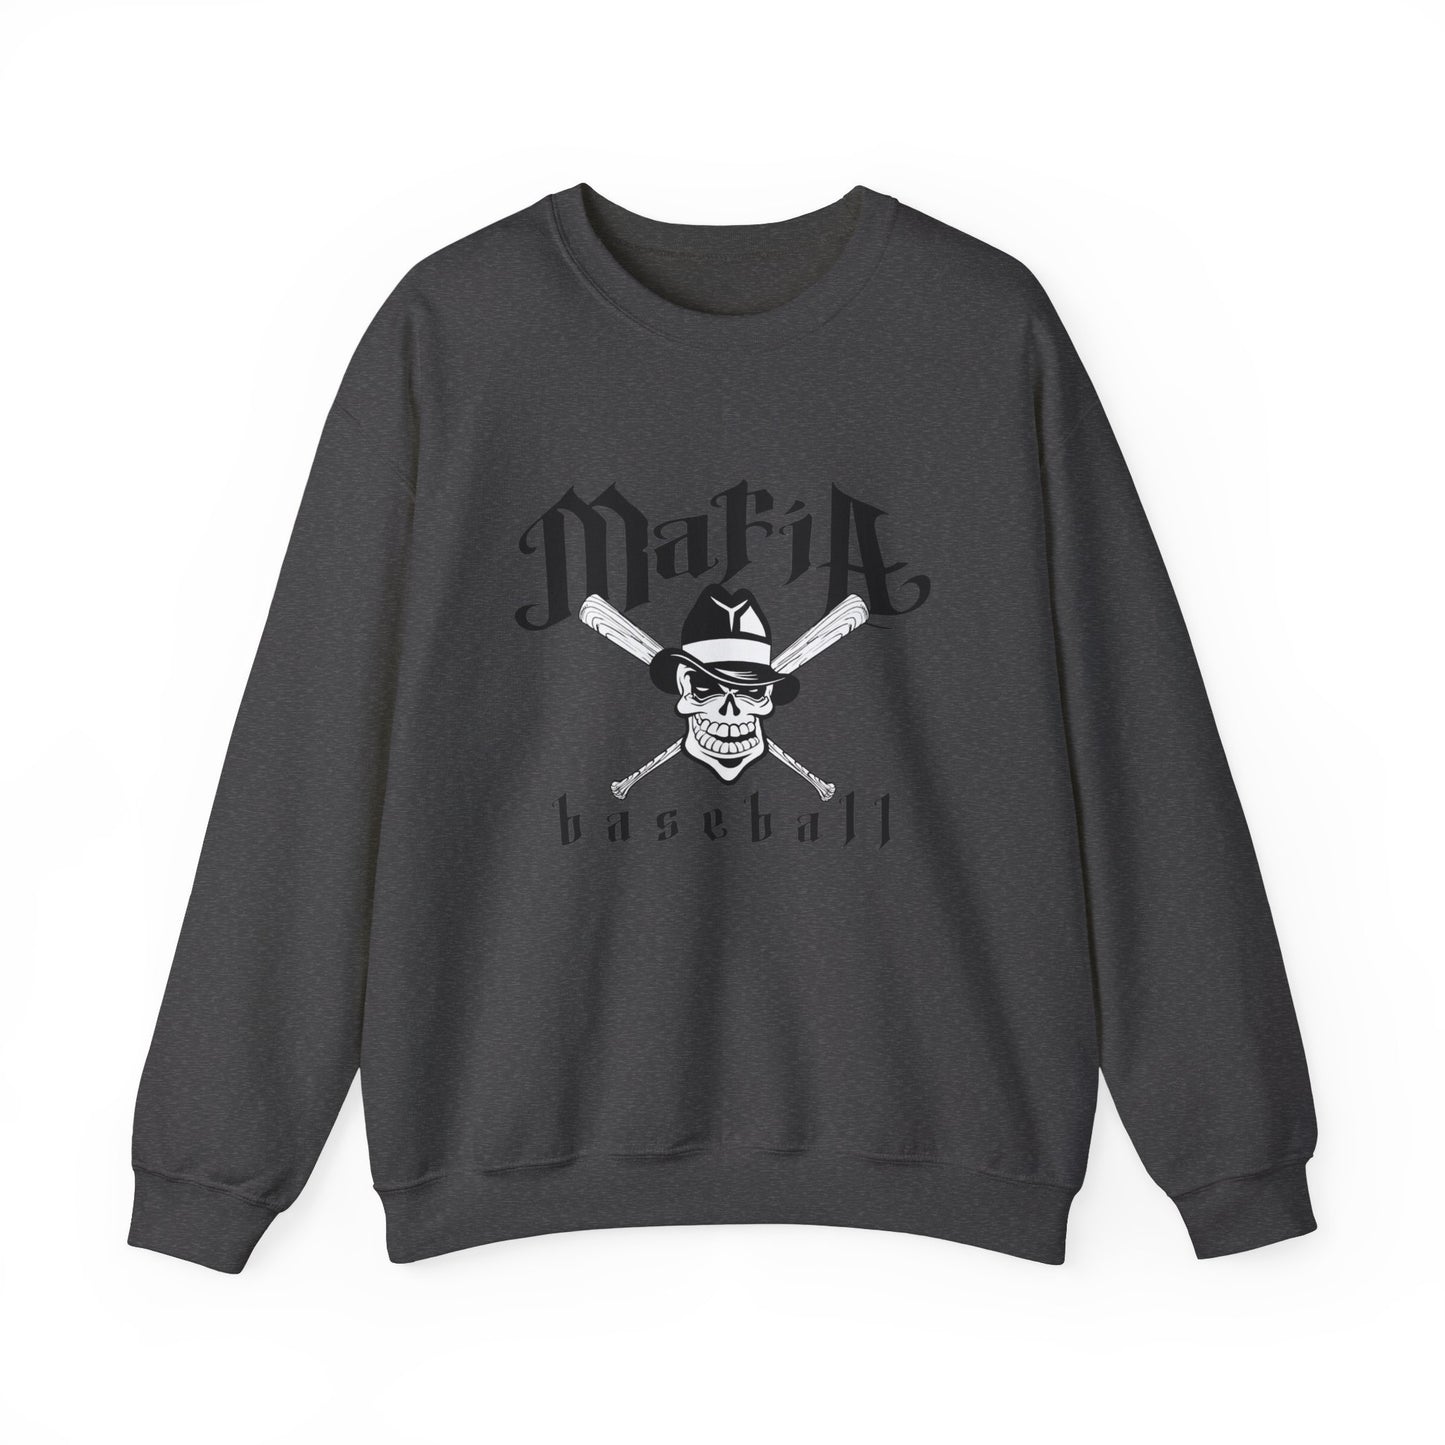 Mafia Baseball Heavy Blend™ Crewneck Sweatshirt